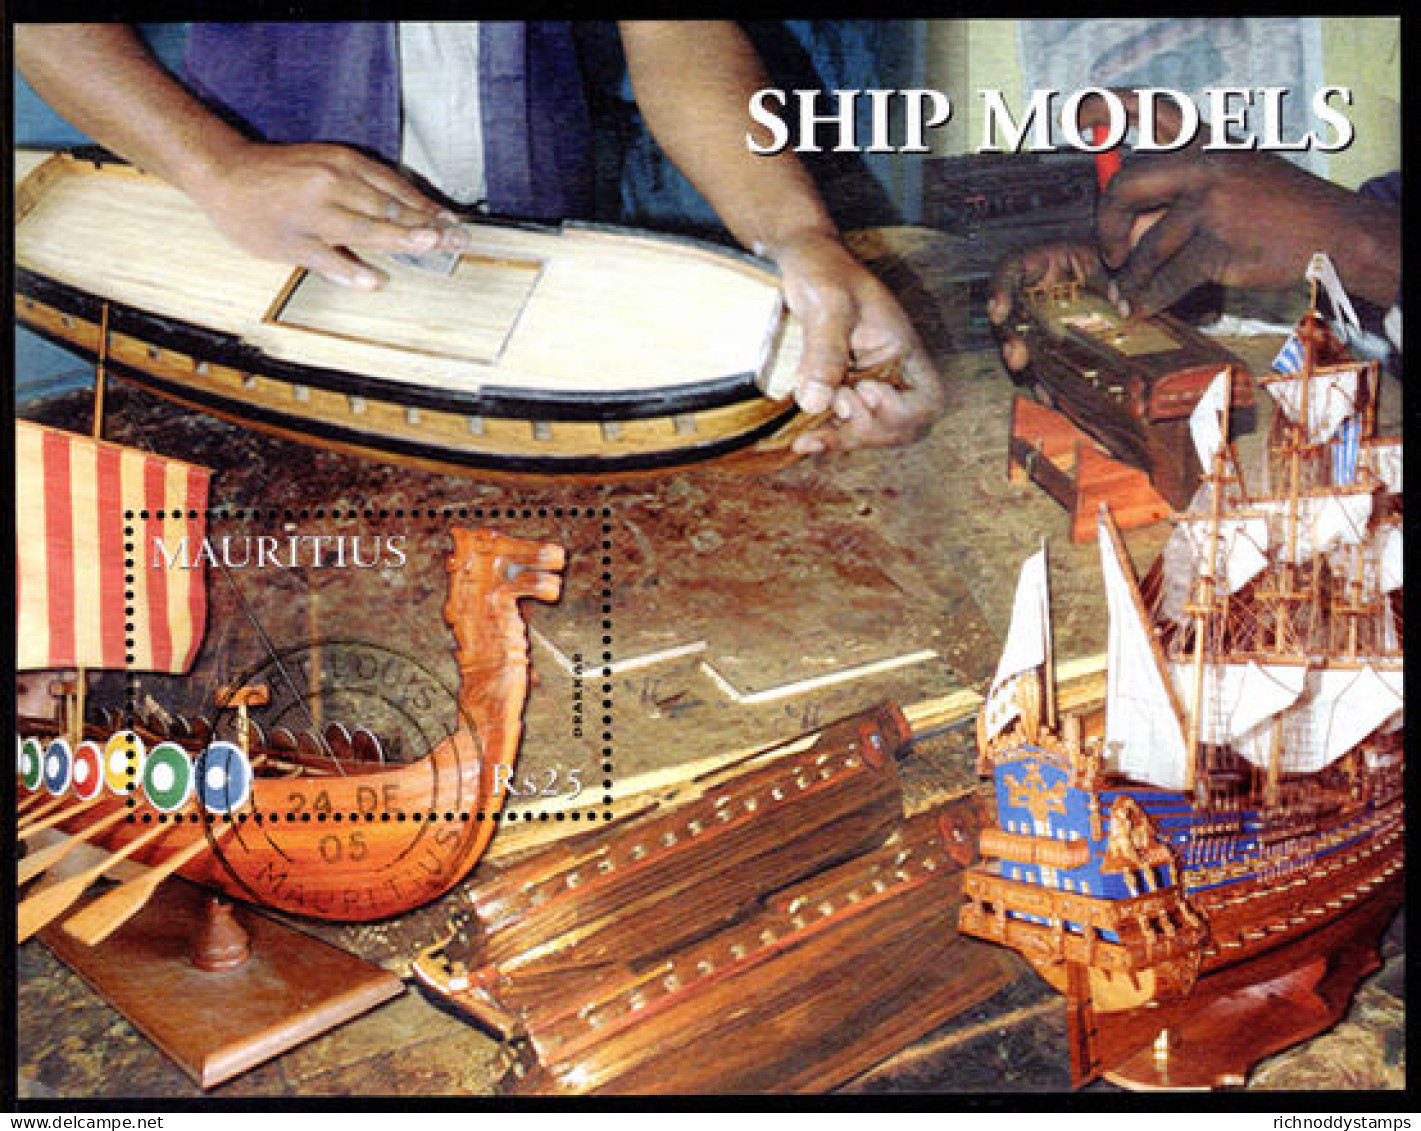 Mauritius 2005 Model Ships Souvenir Sheet Fine Used. - Maurice (1968-...)